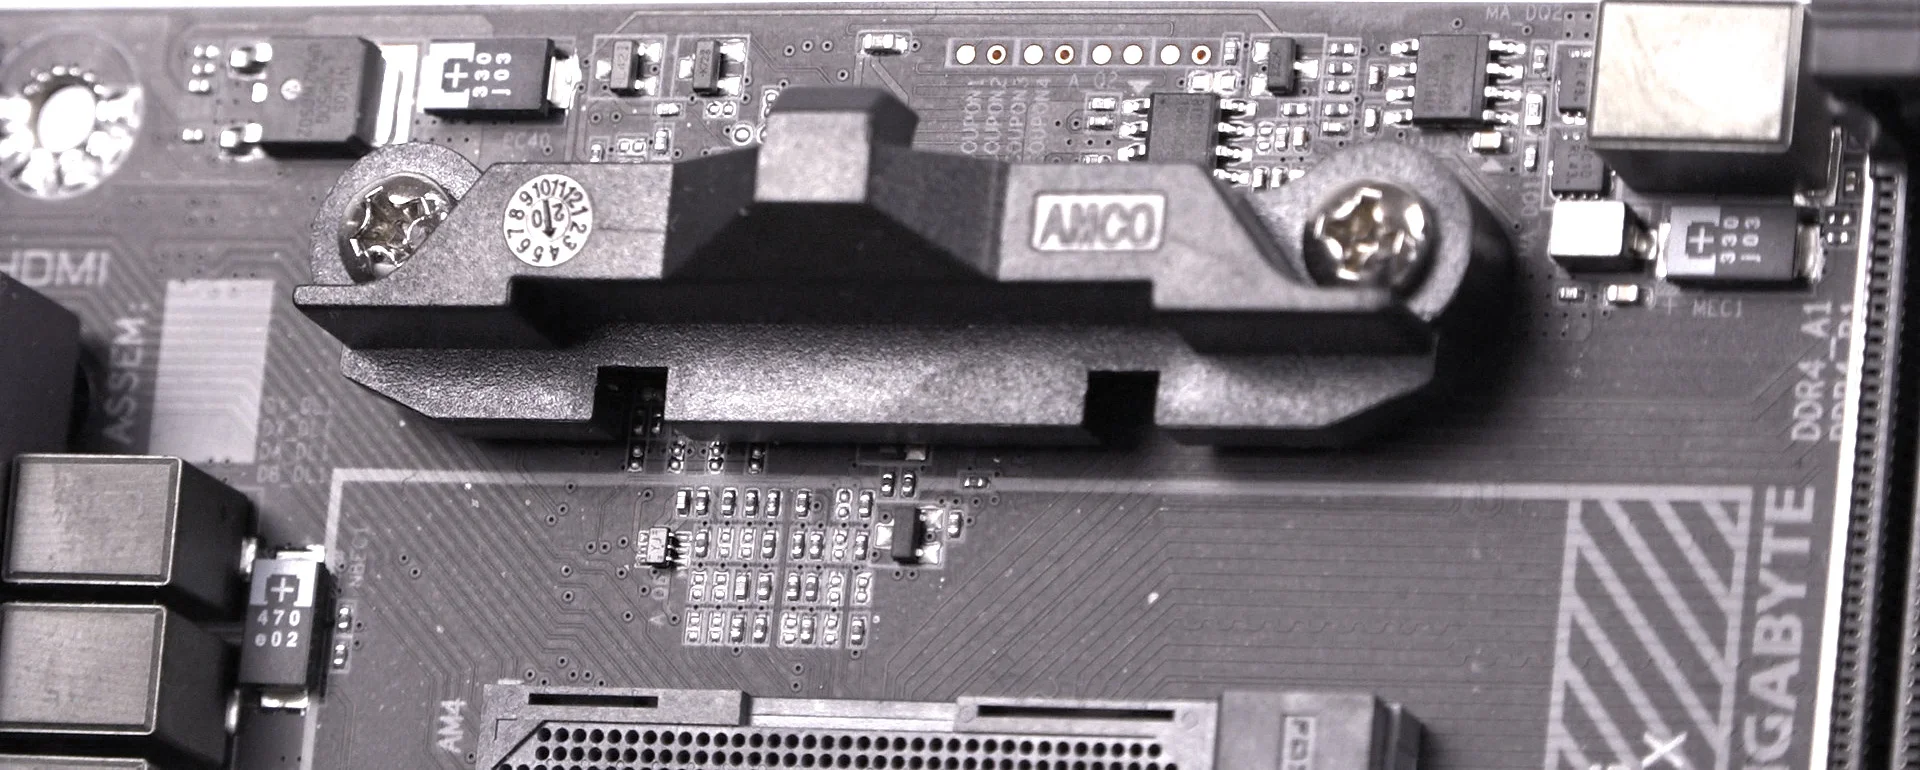 AMD B550 — брать или нет? Разбираем преимущества и недостатки на примере Gigabyte B550i - фото 7